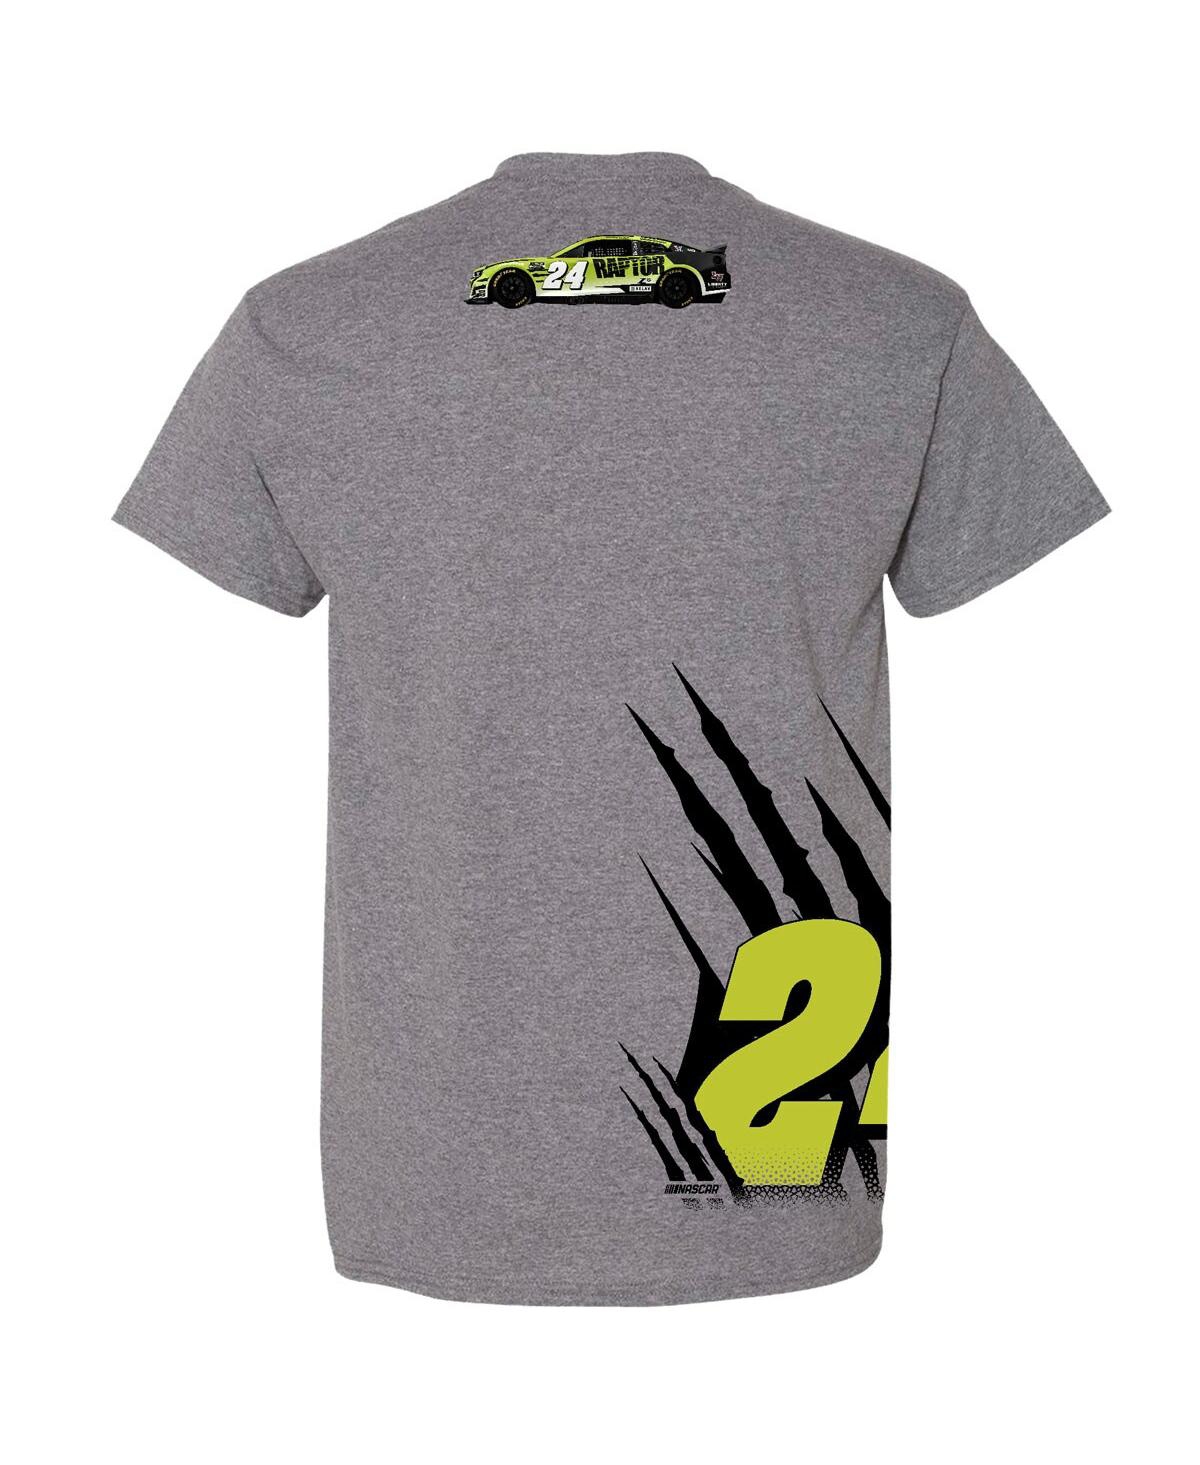 Shop Hendrick Motorsports Team Collection Men's  Heather Charcoal William Byron Raptor T-shirt